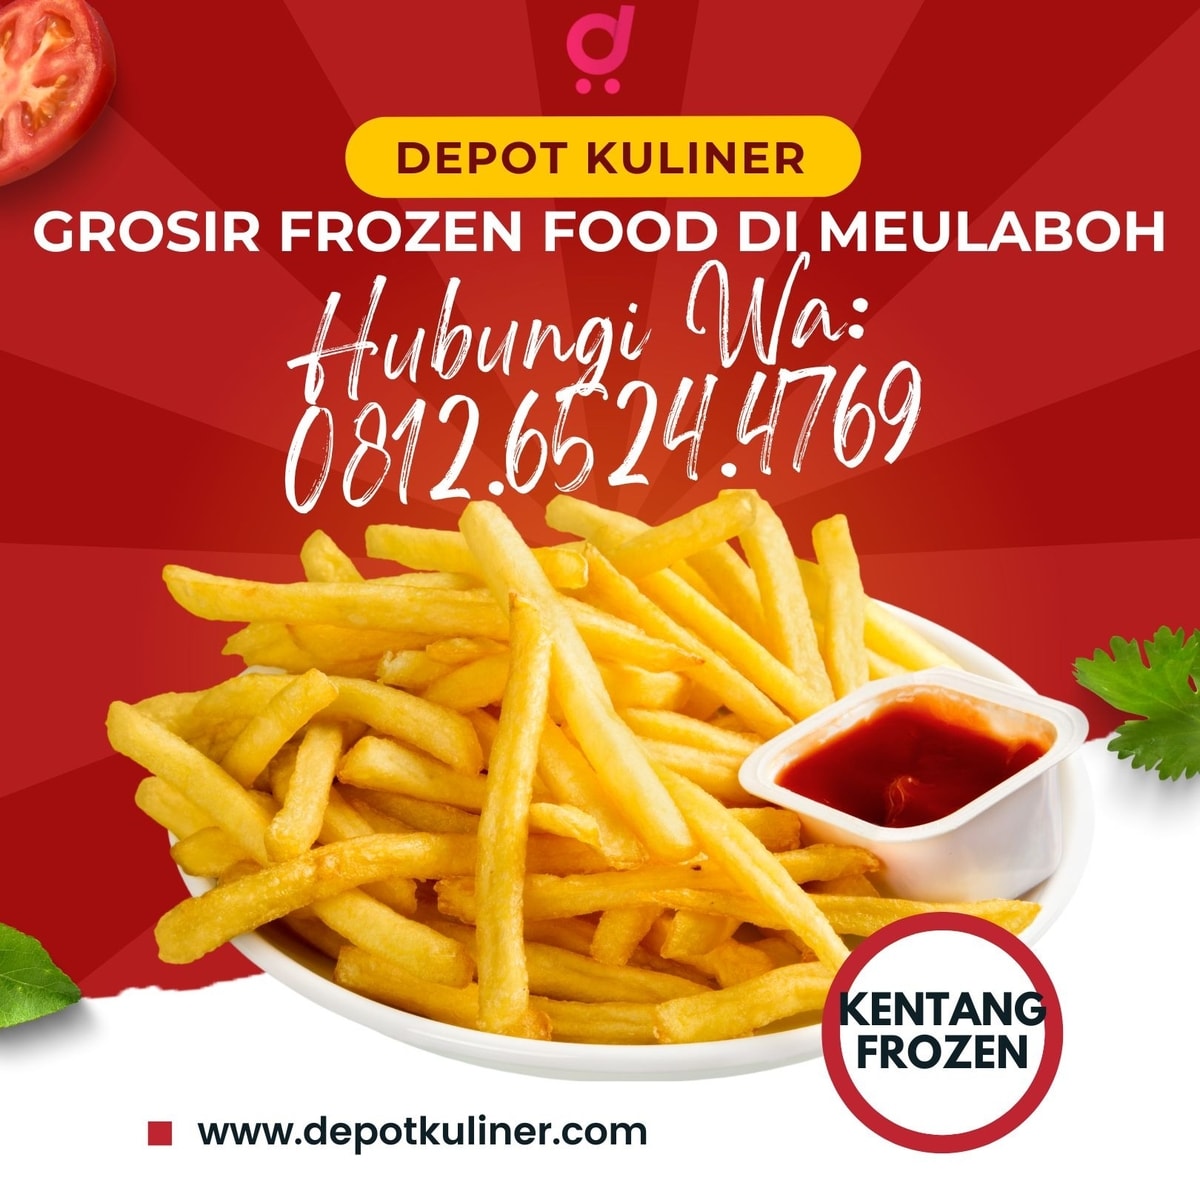 Grosir Frozen Food di Meulaboh LARIS MANIS, 081265244769